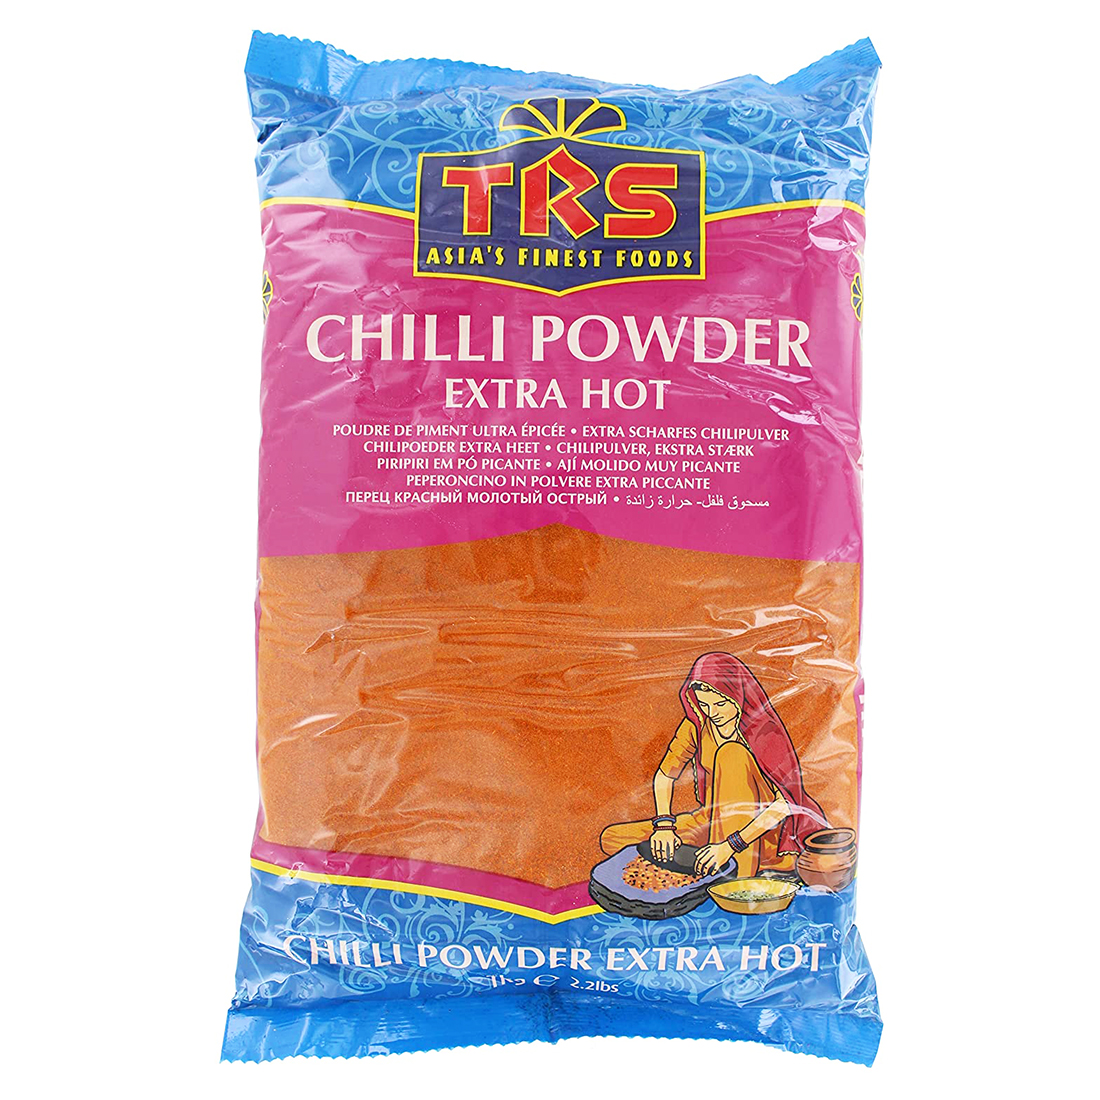 Condimente - Pudra chilli extra hot TRS 100g, asianfood.ro